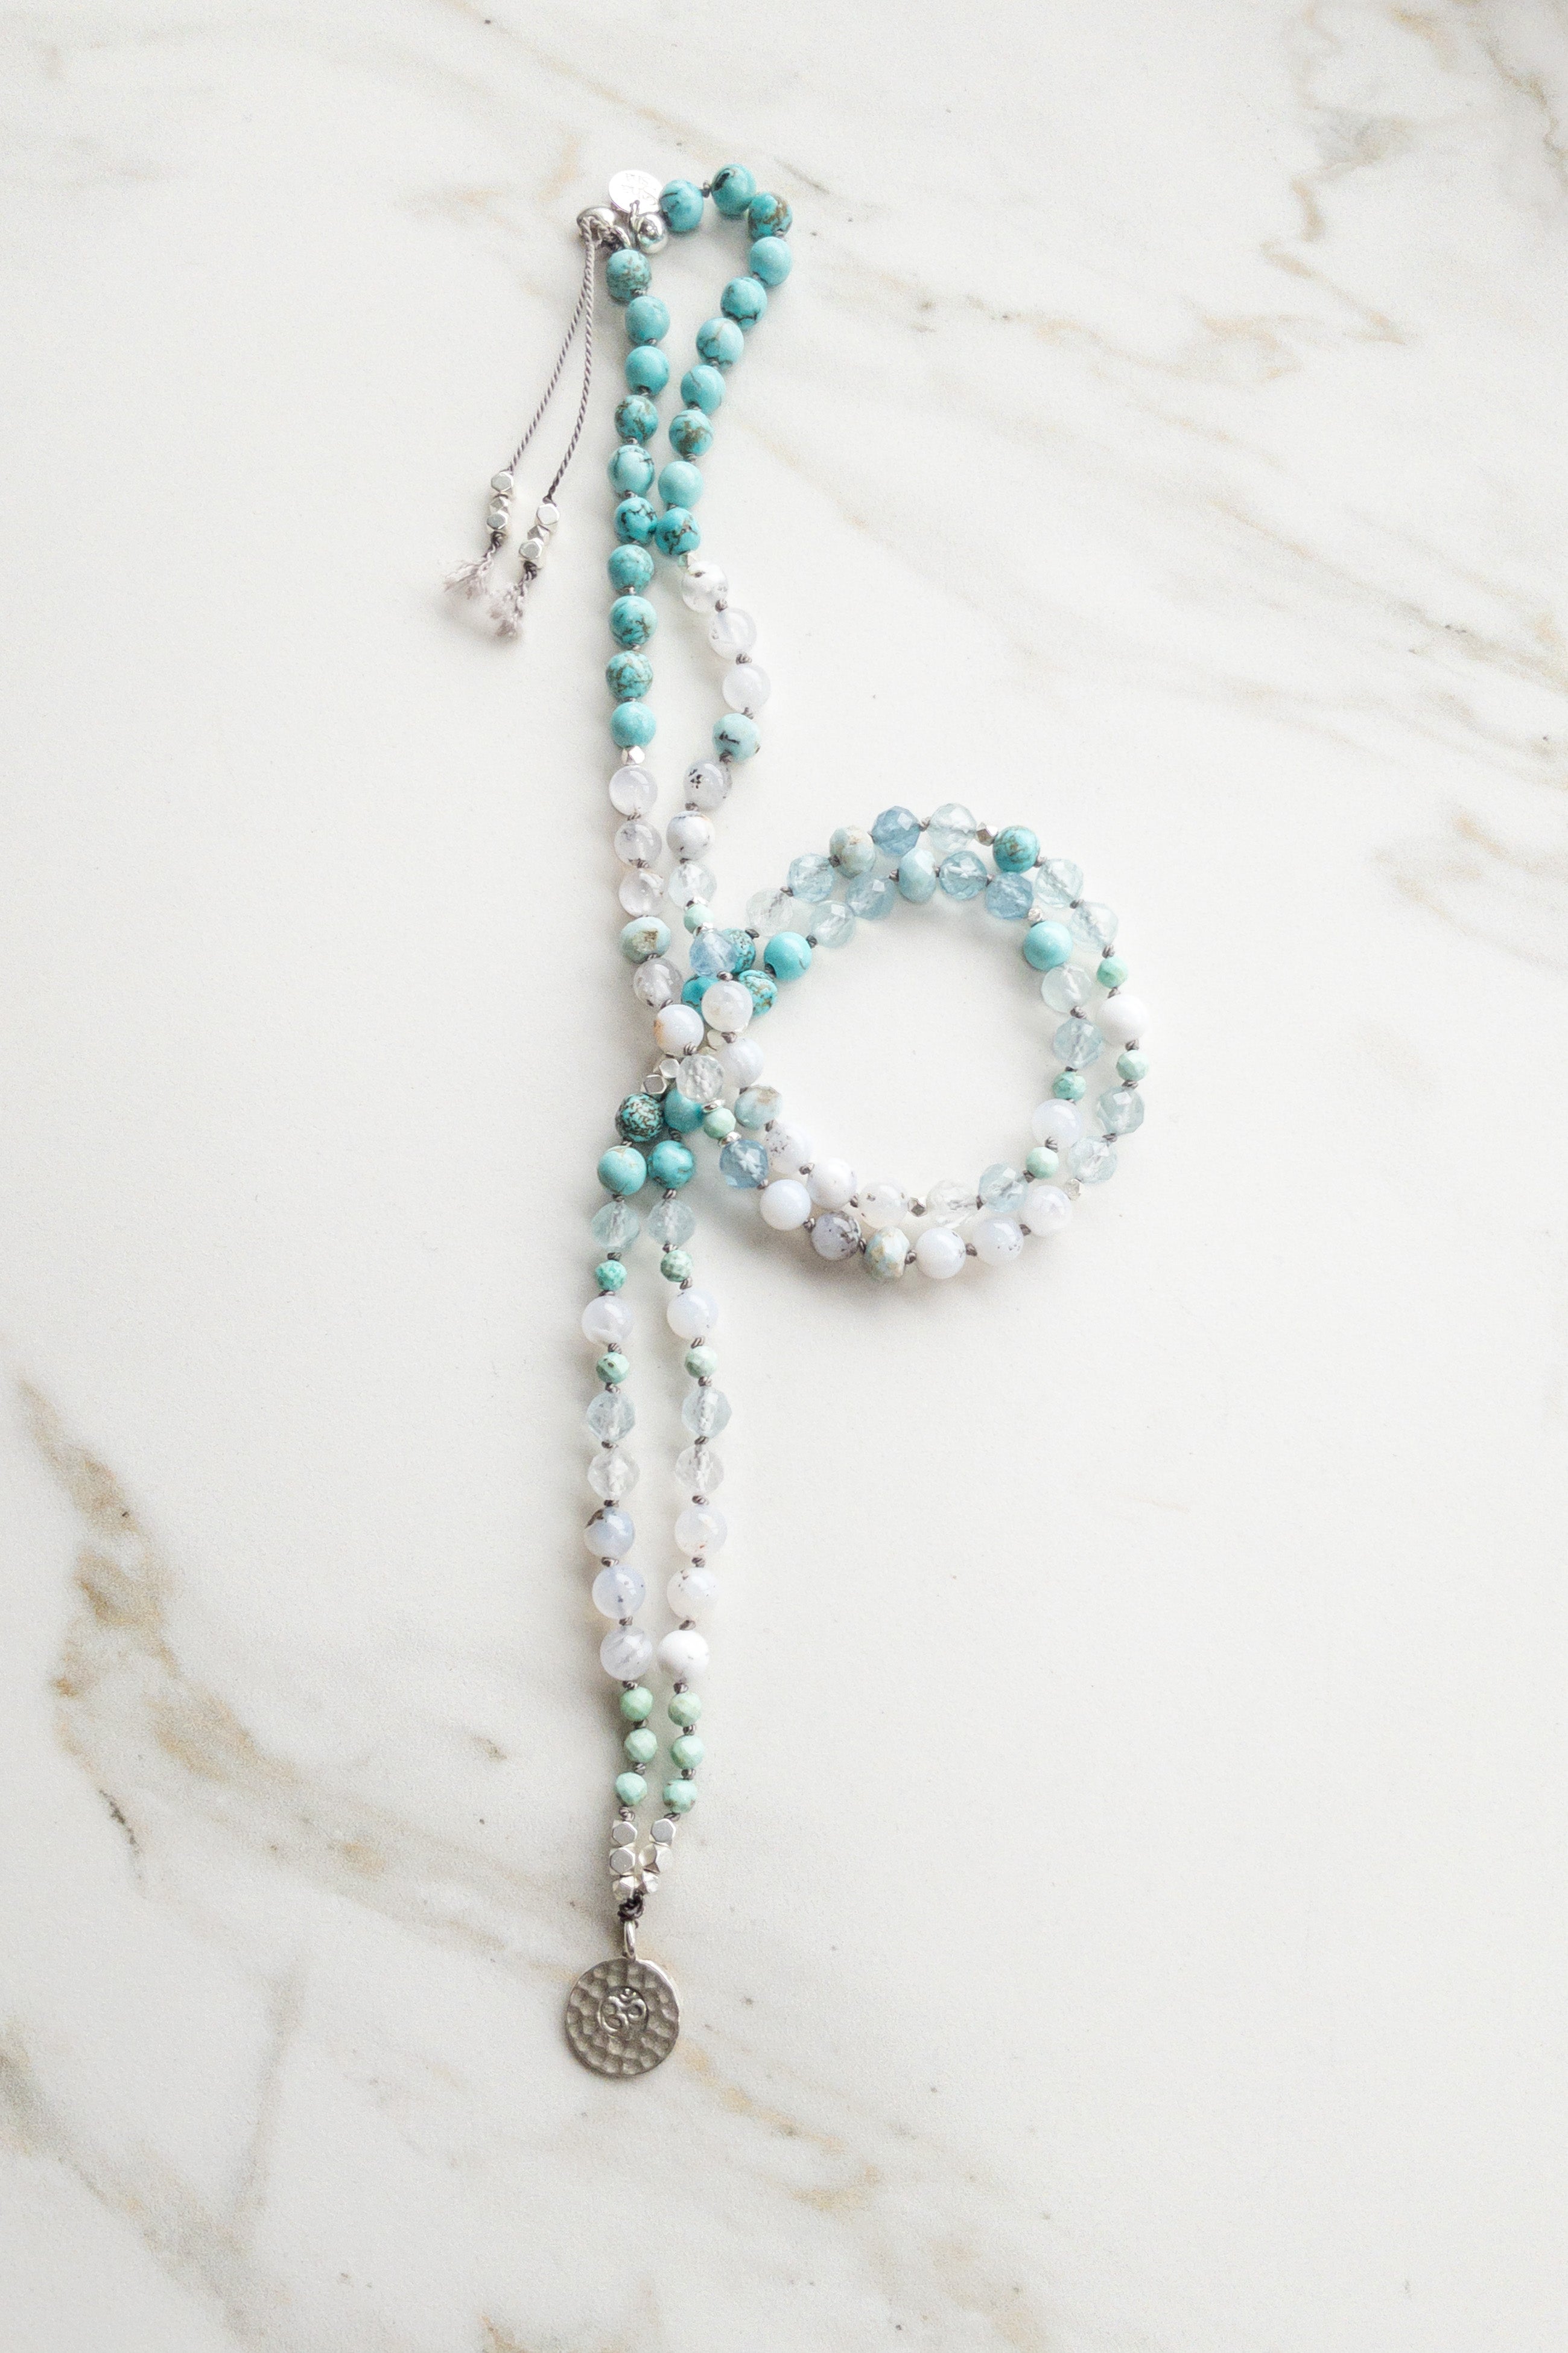 Celestial Serenity Mala Necklace - OM - Indradhanush - turquoise larimar - shashā yoga and meditation jewellery Hand knotted in Switzerland 